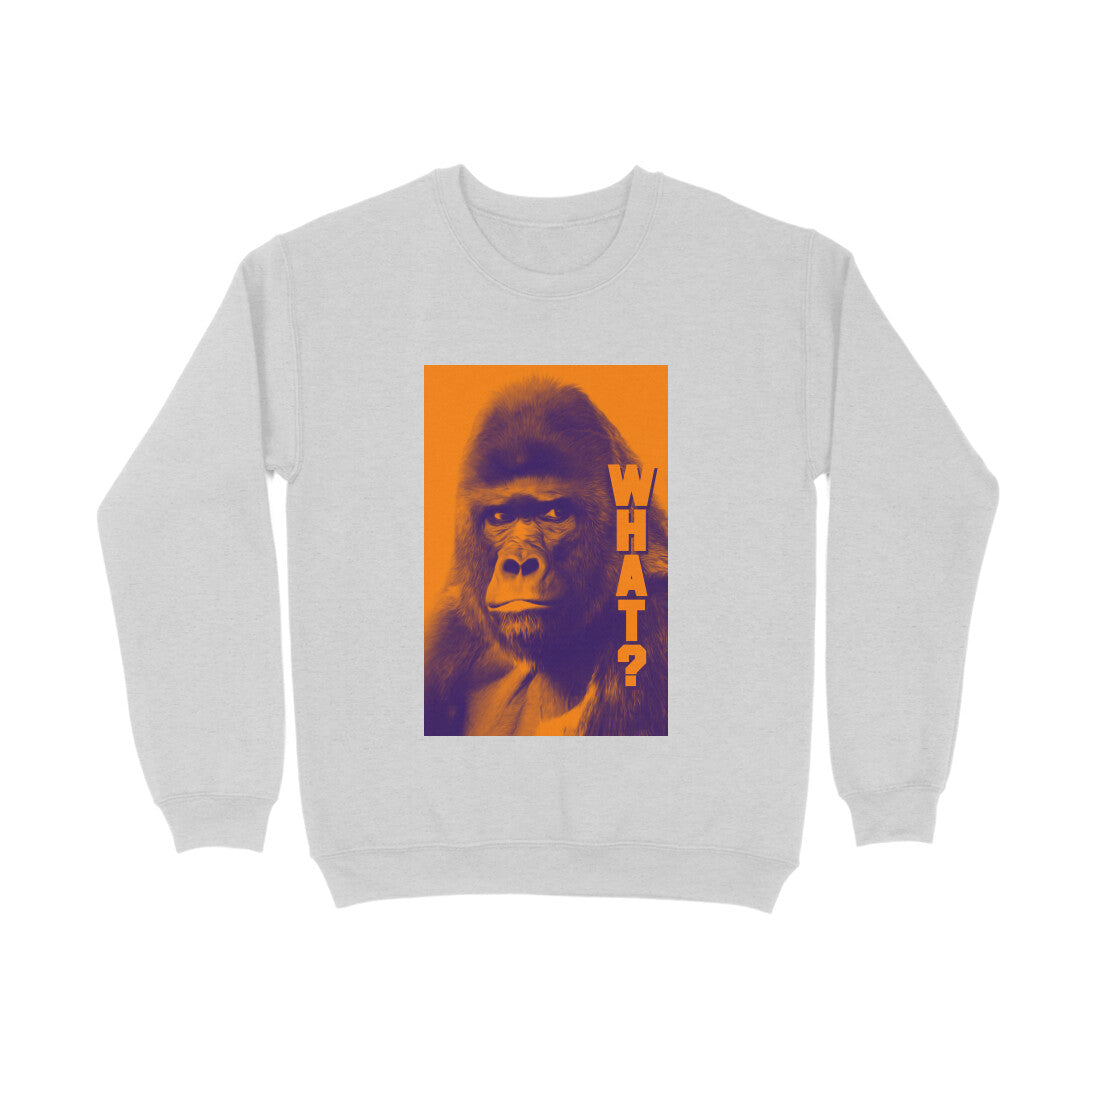 Sweatshirts - Gorilla What -Front Print puraidoprints